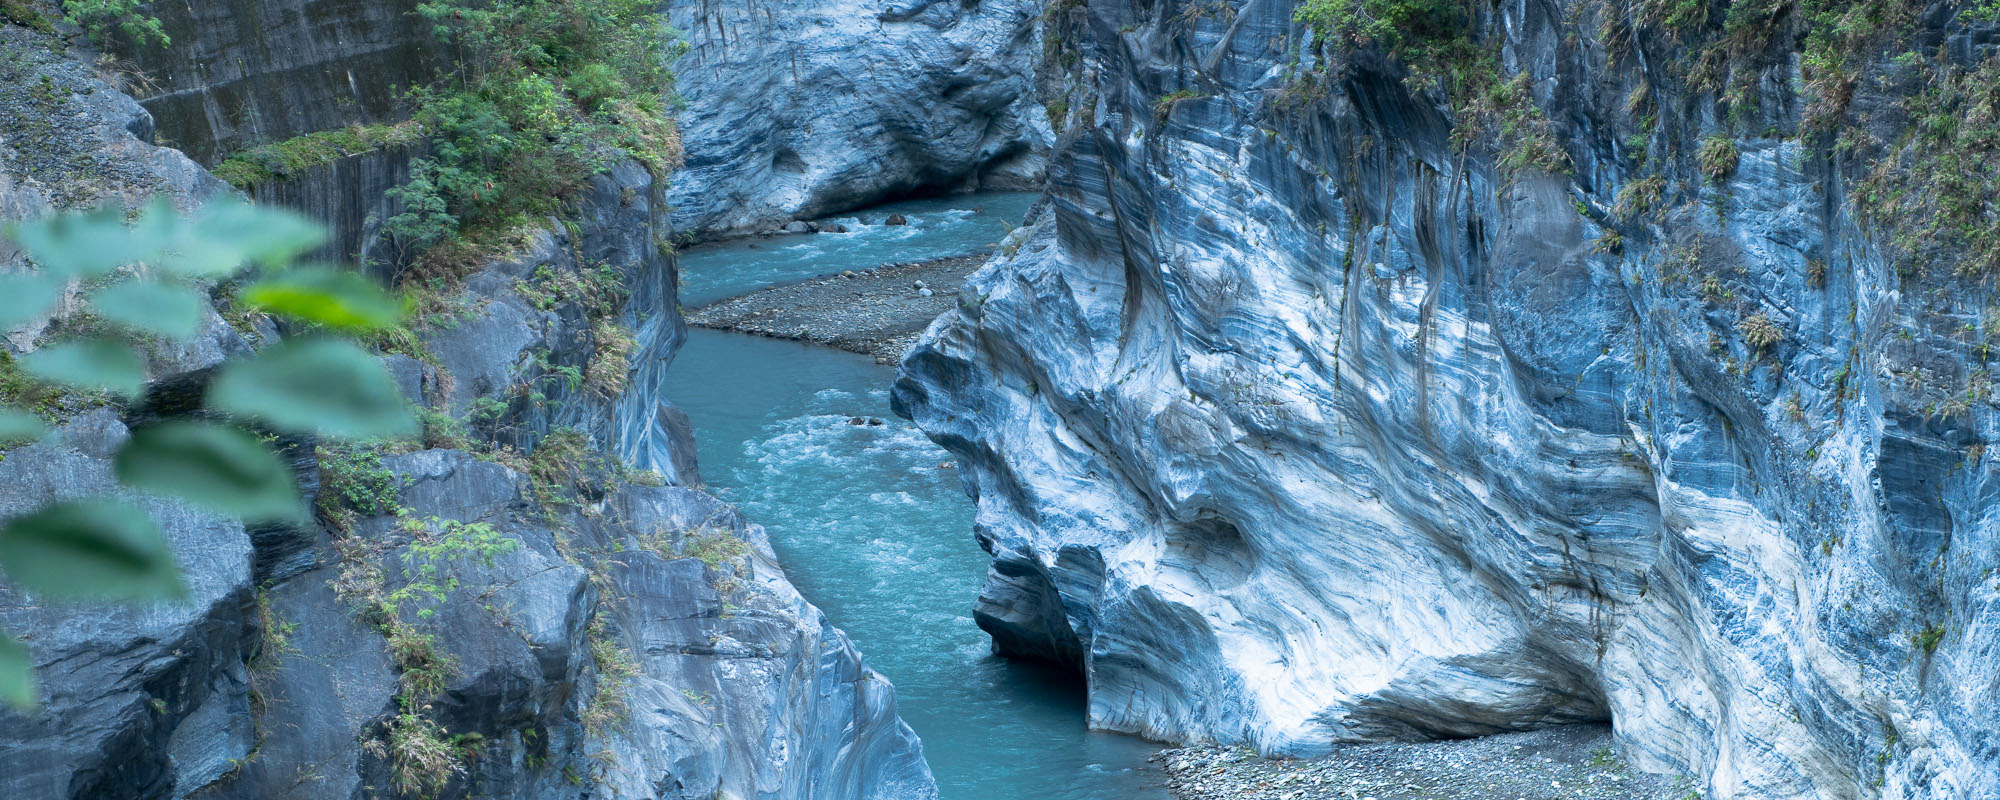 The Liwu River flows through Taroko Gorge.